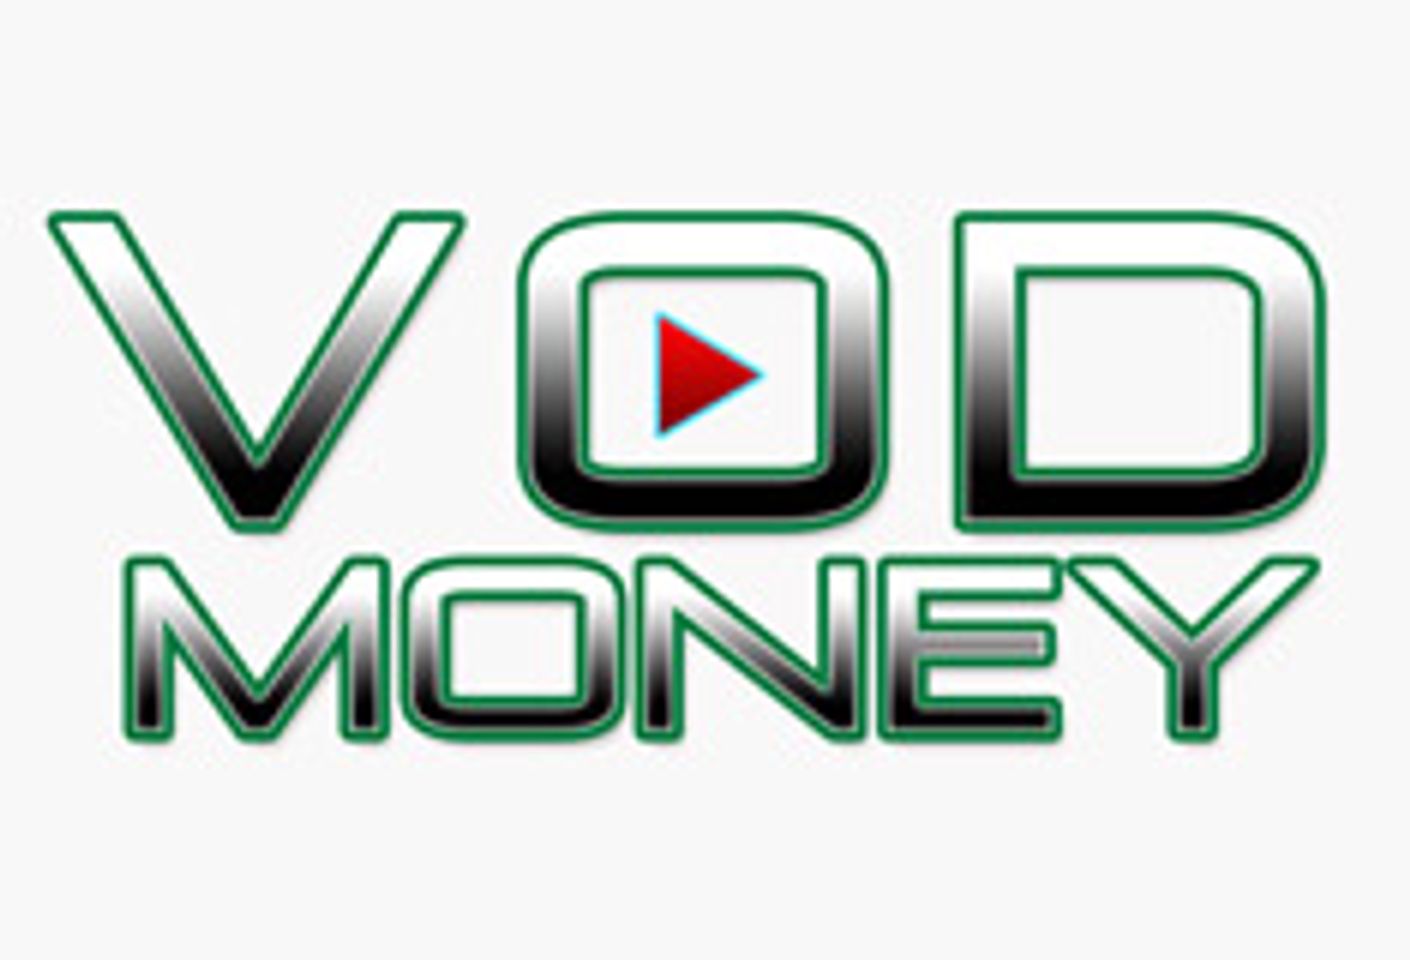 VODMoney.com Announces the Addition of XParodies